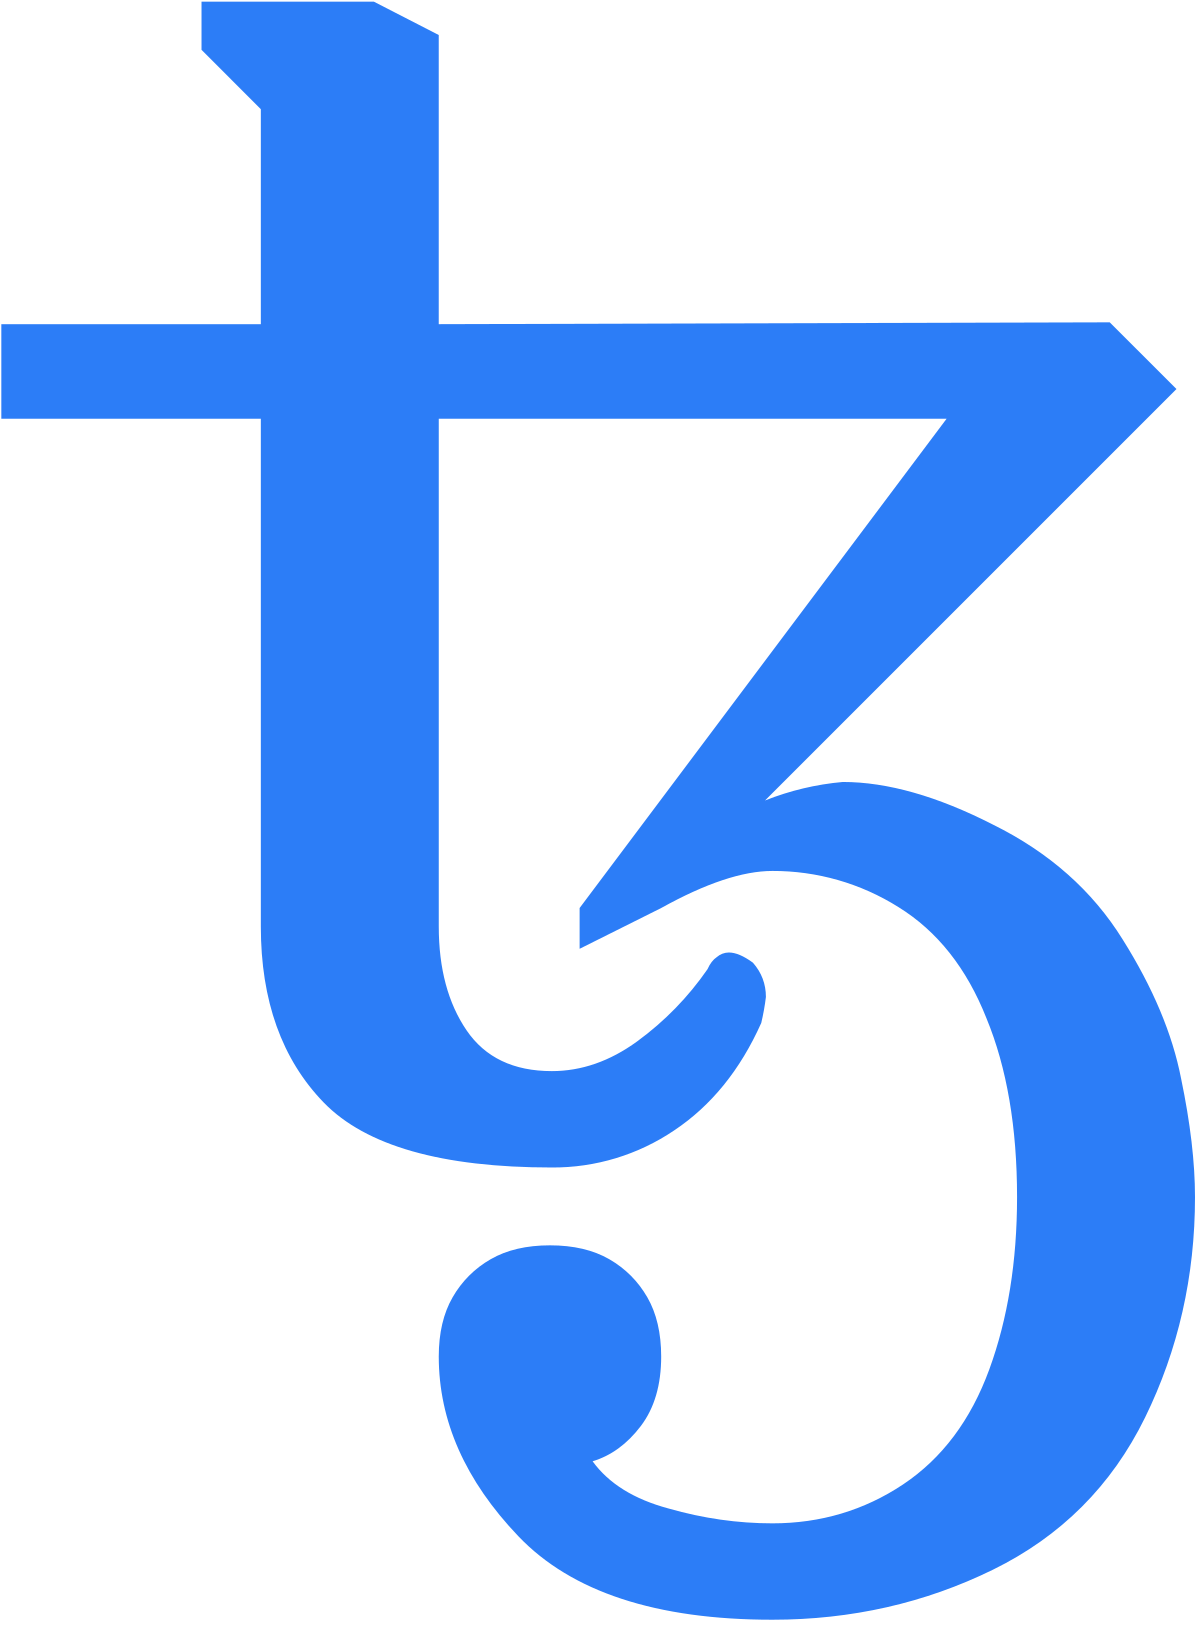 Fil:Tezos logo.svg - Wikimedia Commons